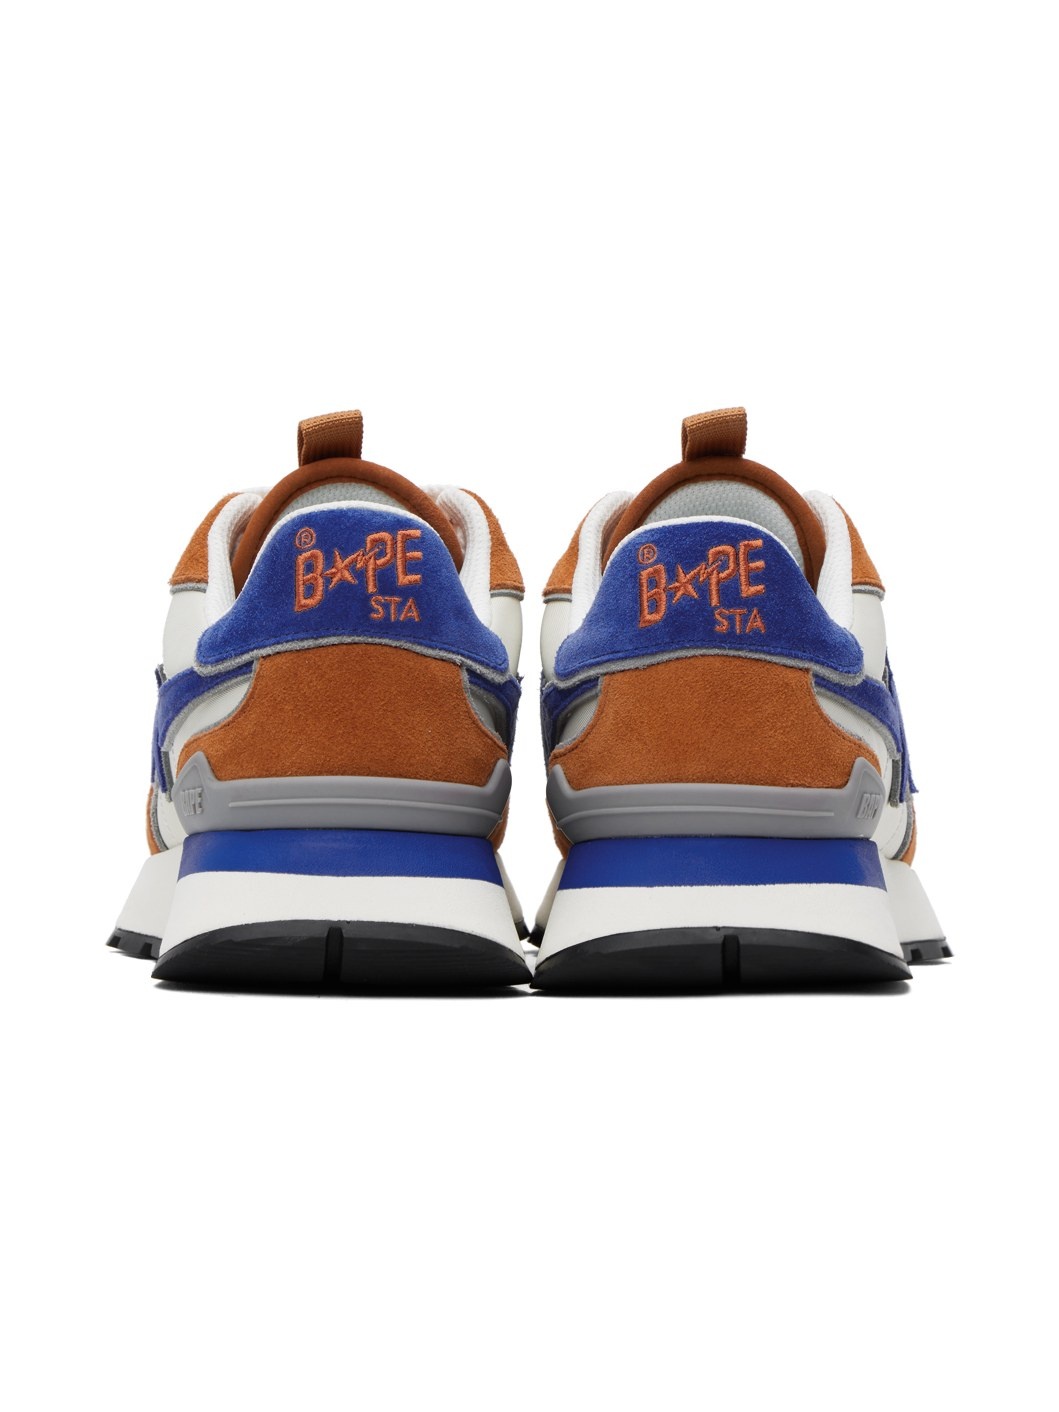 Orange & Blue Road STA Express Sneakers - 2